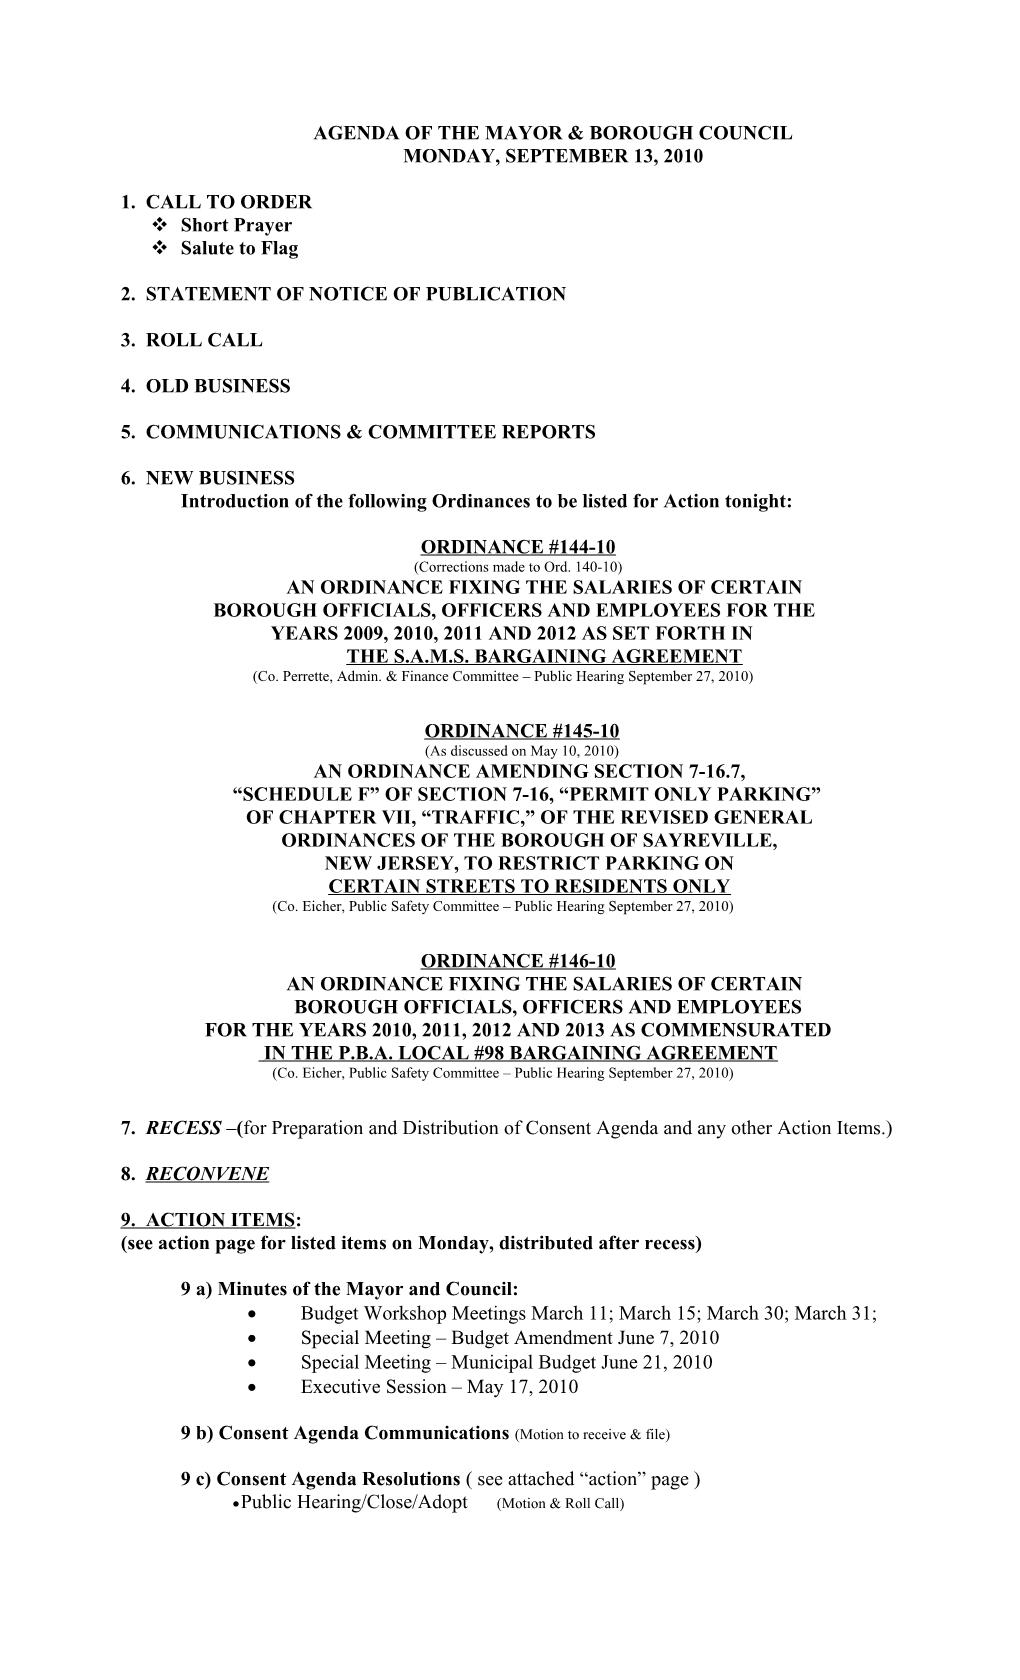 Agenda of the Mayor & Borough Council s1